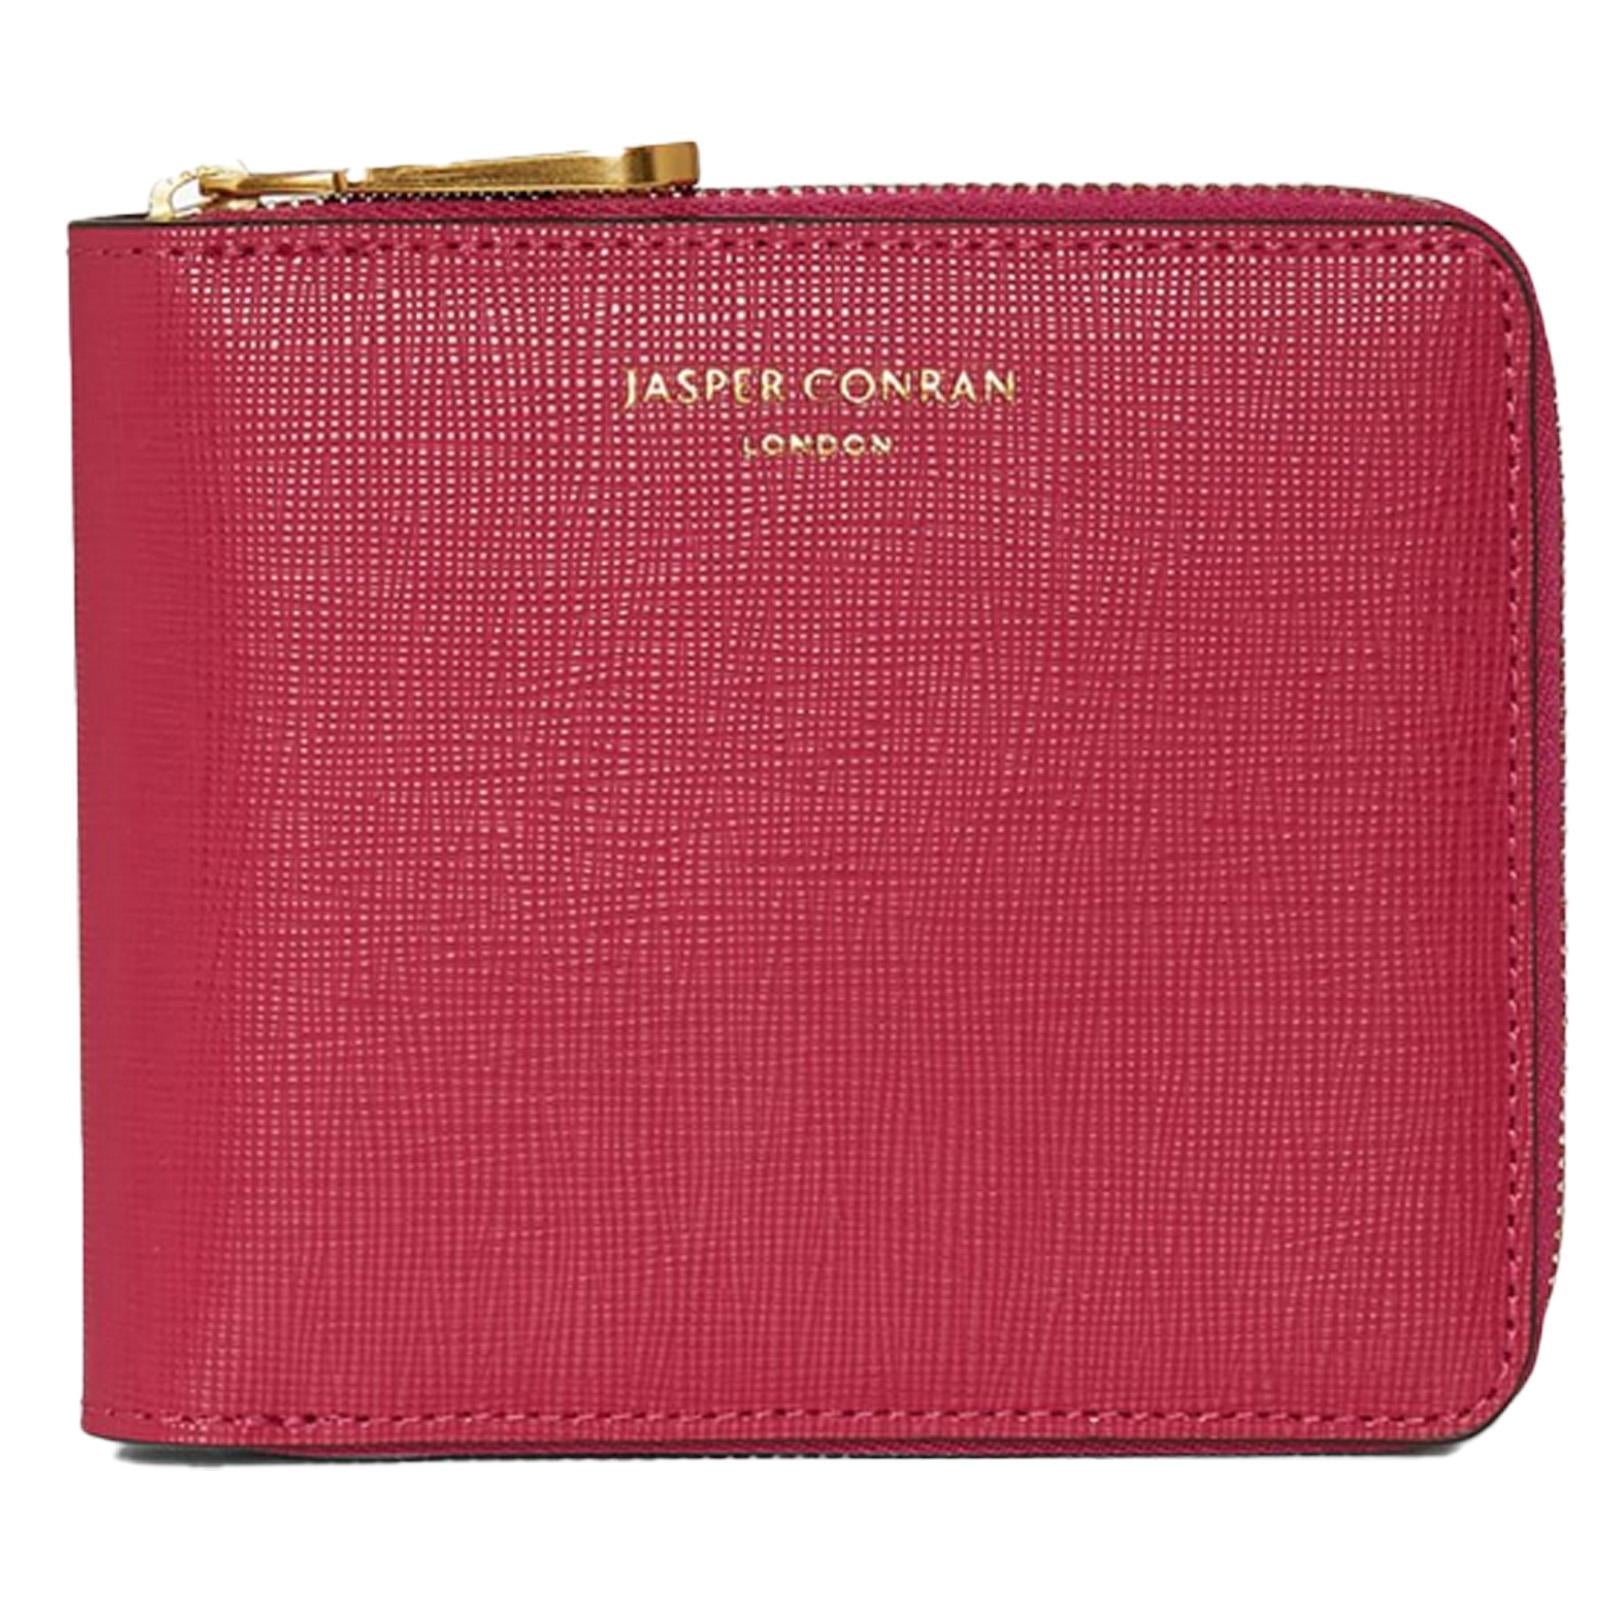 Jasper Conran debuts handbag and accessory collection